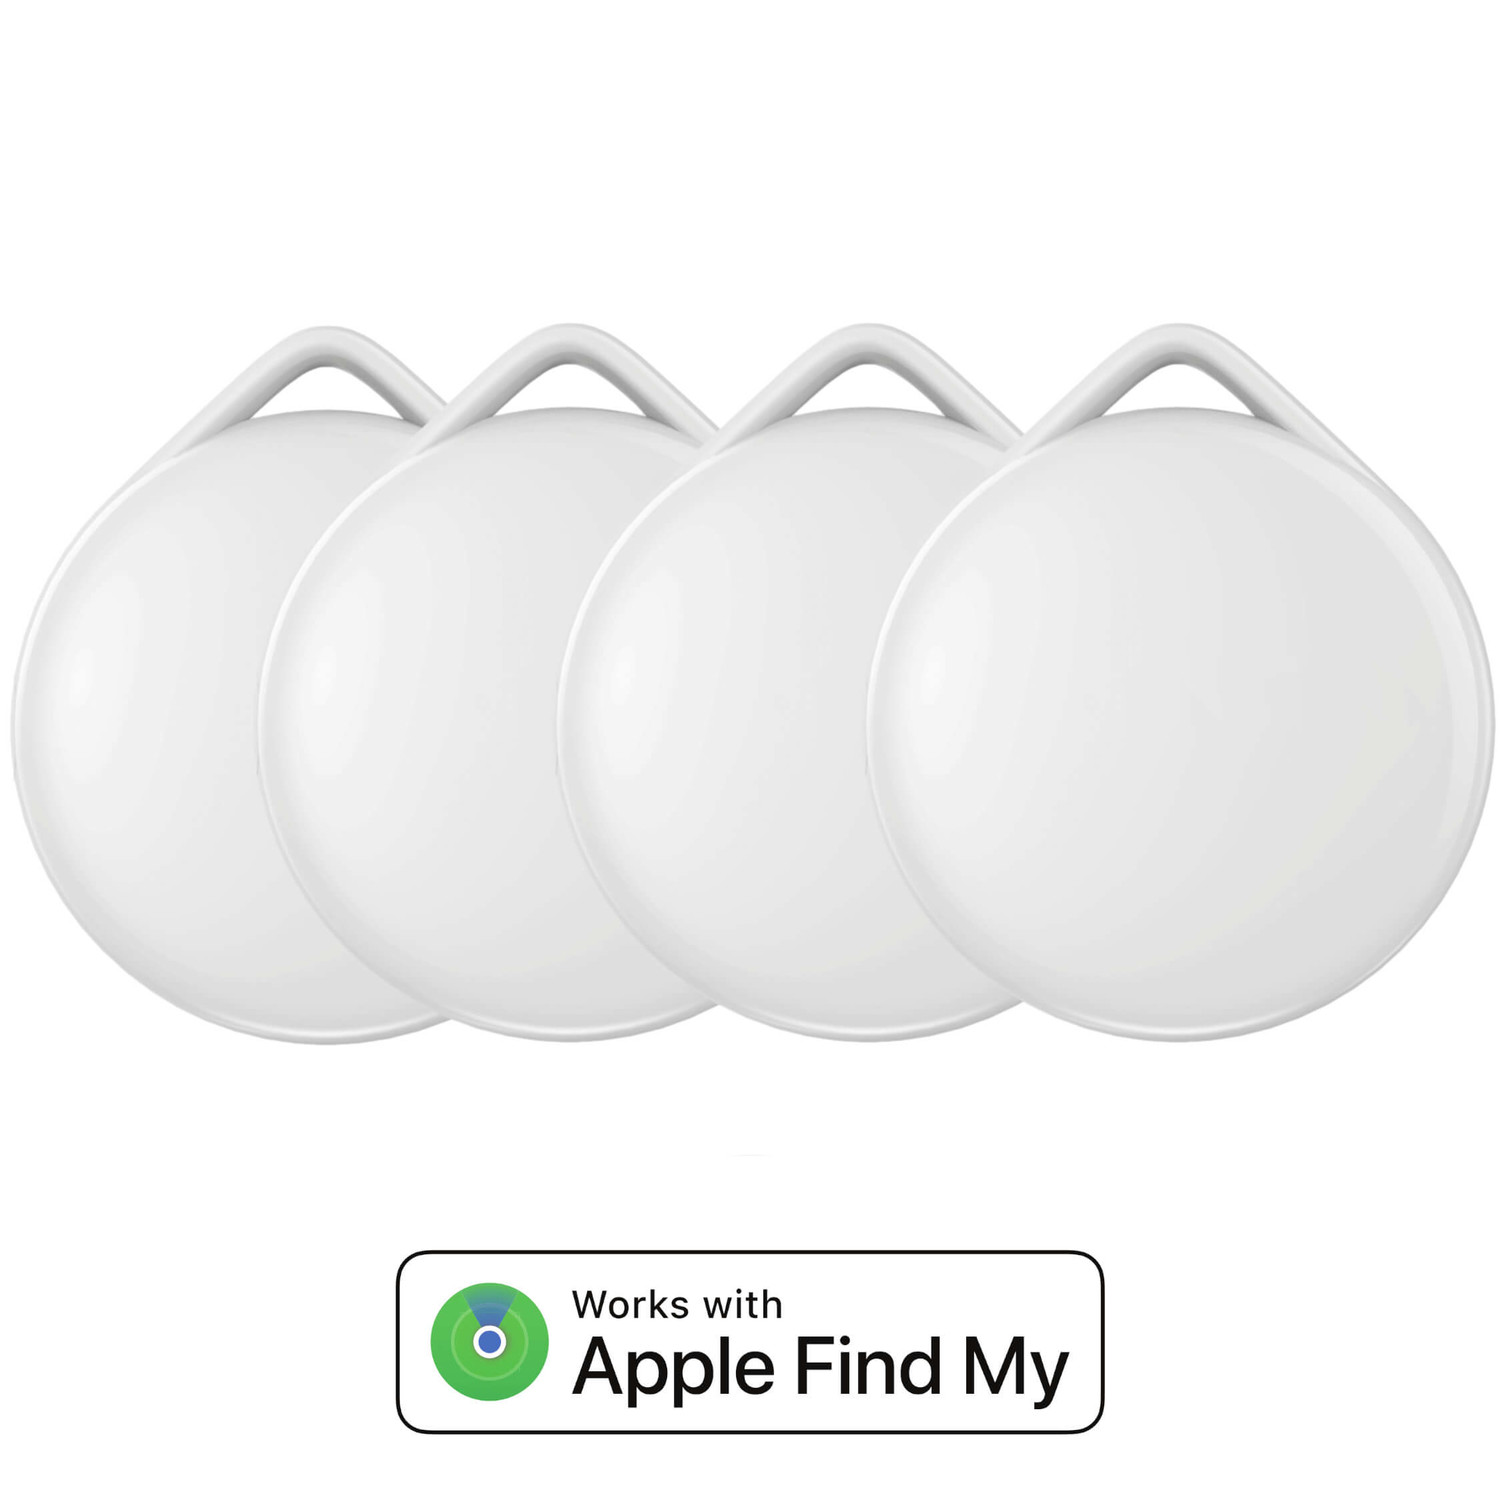 Set 4 ks ARMODD iTag bílý bez loga (AirTag alternativa) s podporou Apple Find My (Najít)